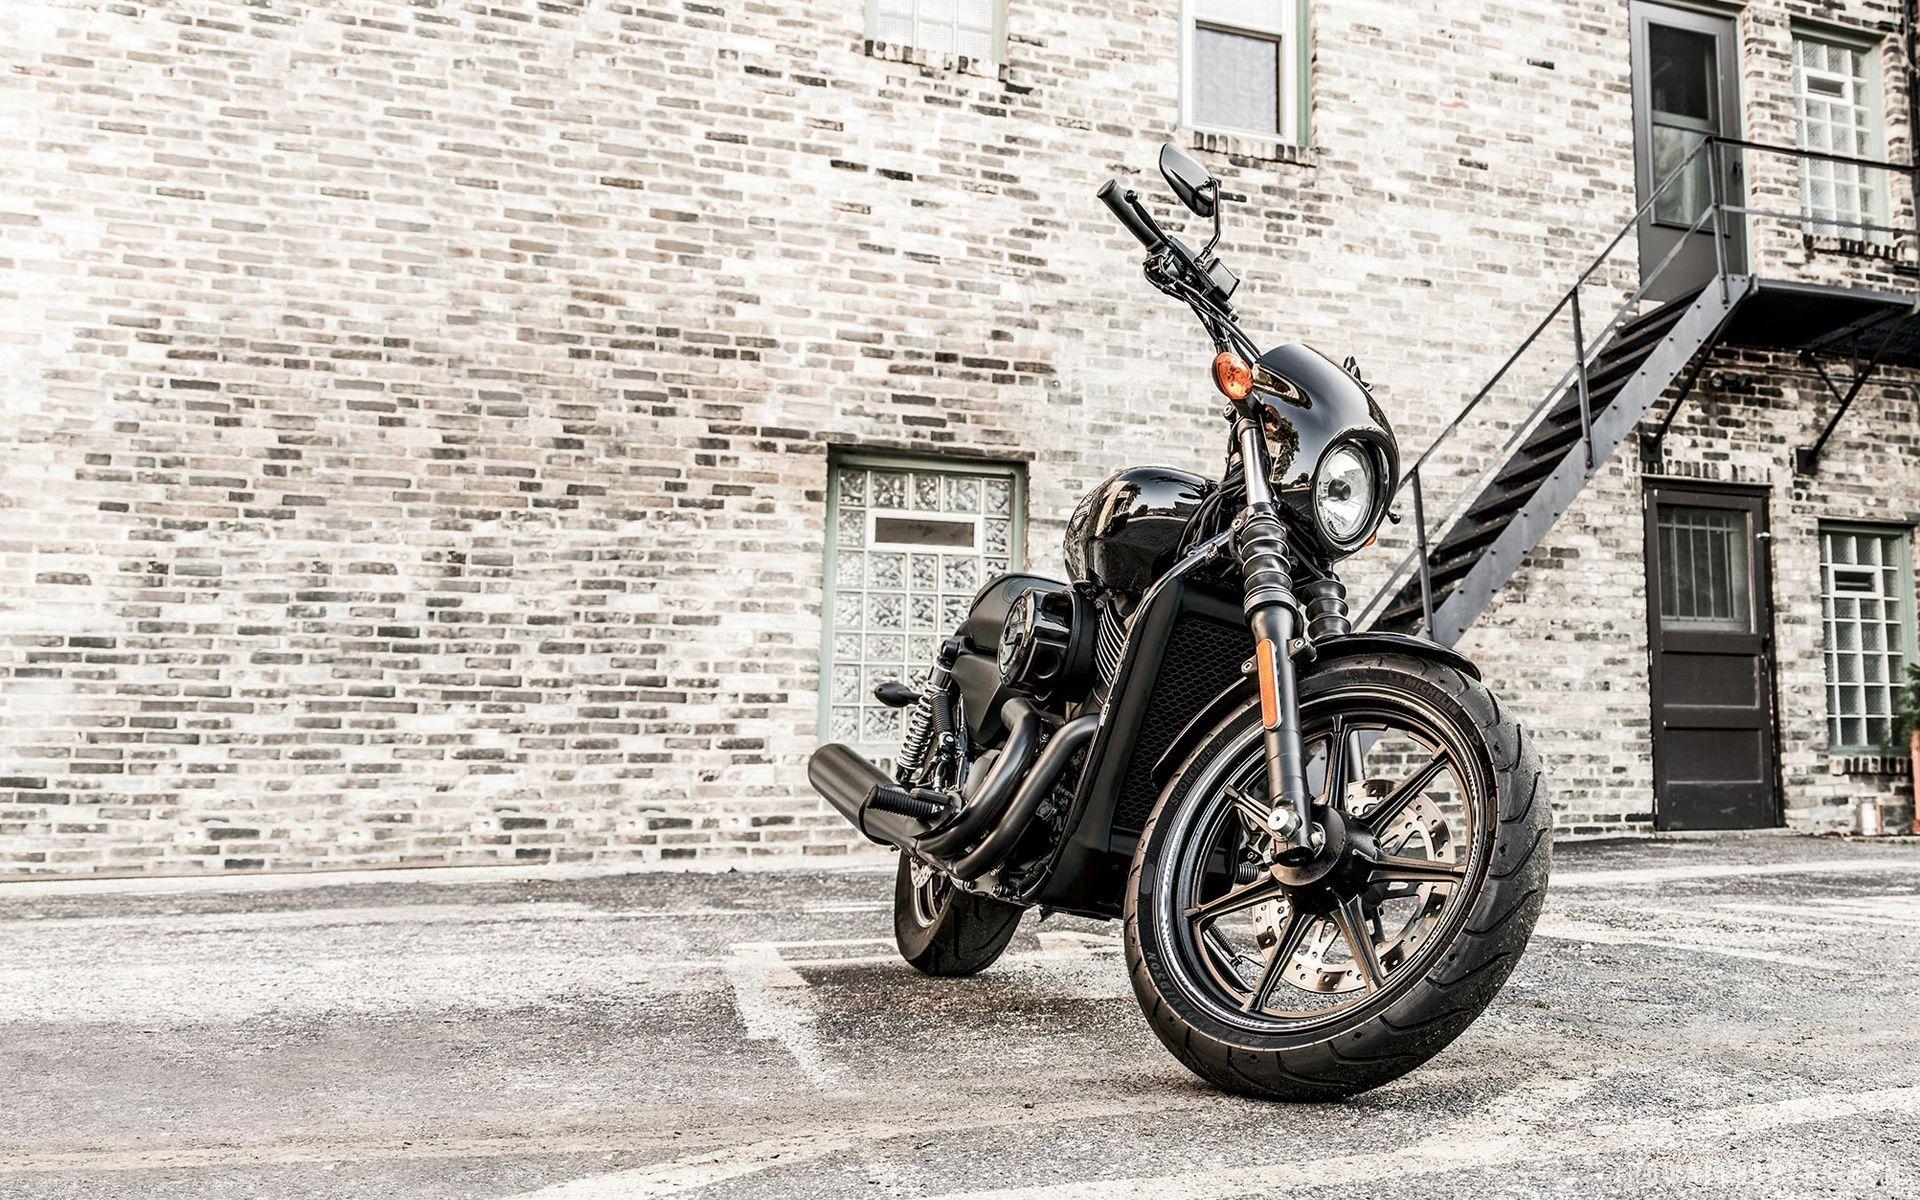 Harley Davidson Street 750 wallpaper. bikes and motorcycles